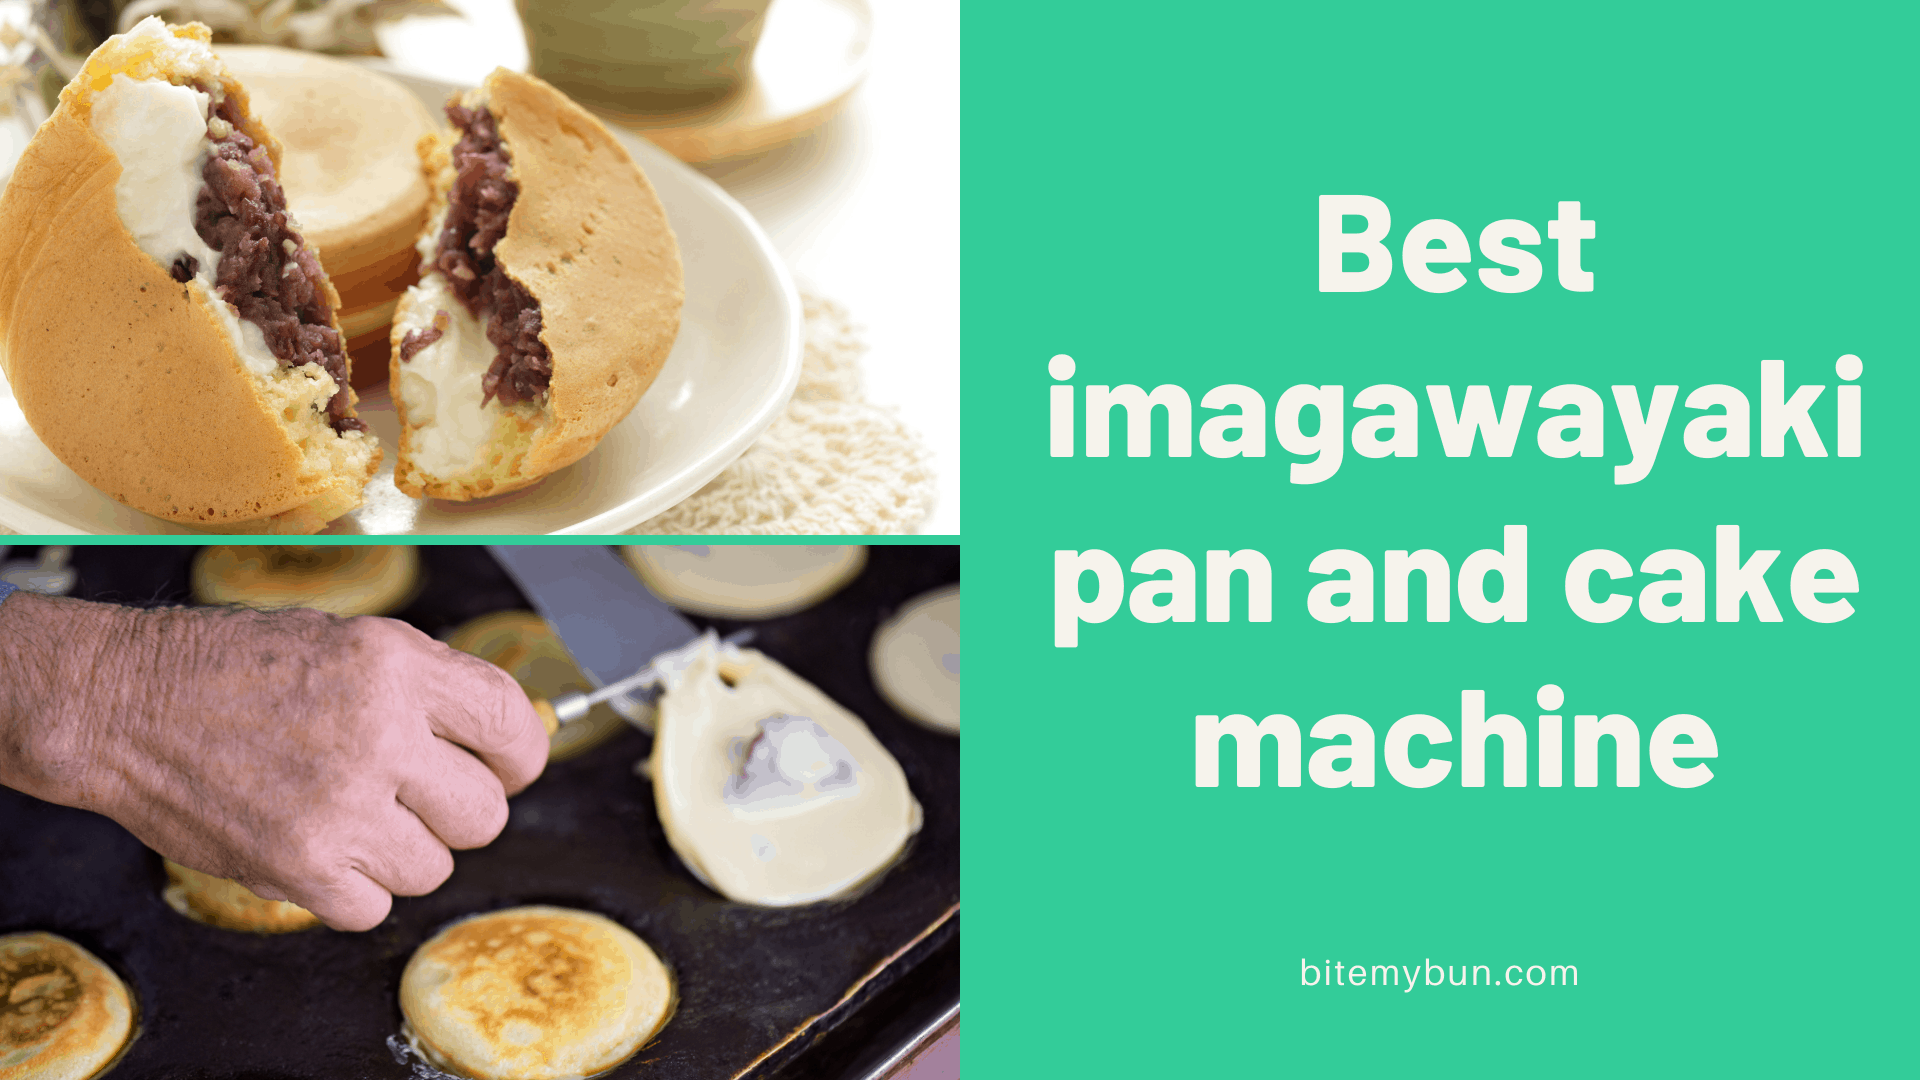 Best imagawayaki pan and cake machine | Top 7 options reviewed